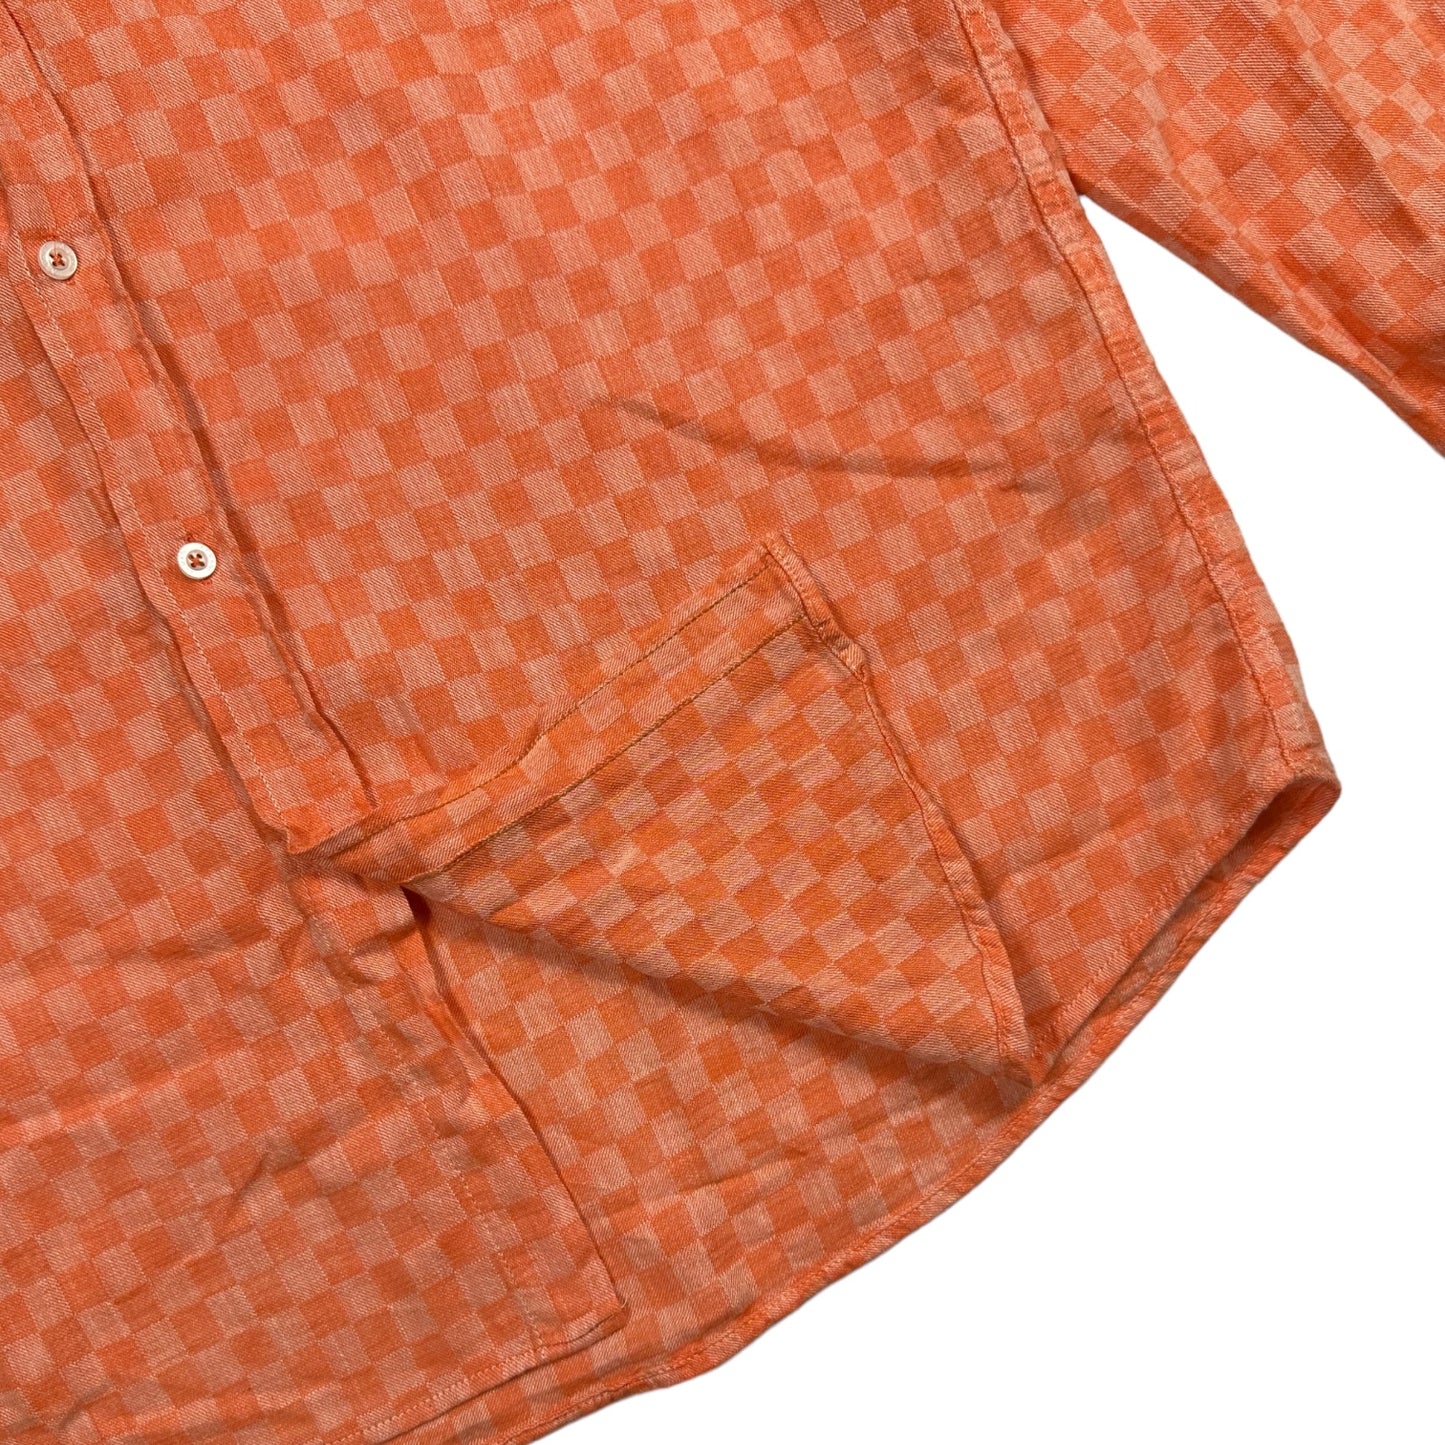 Armani Jeans Patterend Orange Shirt